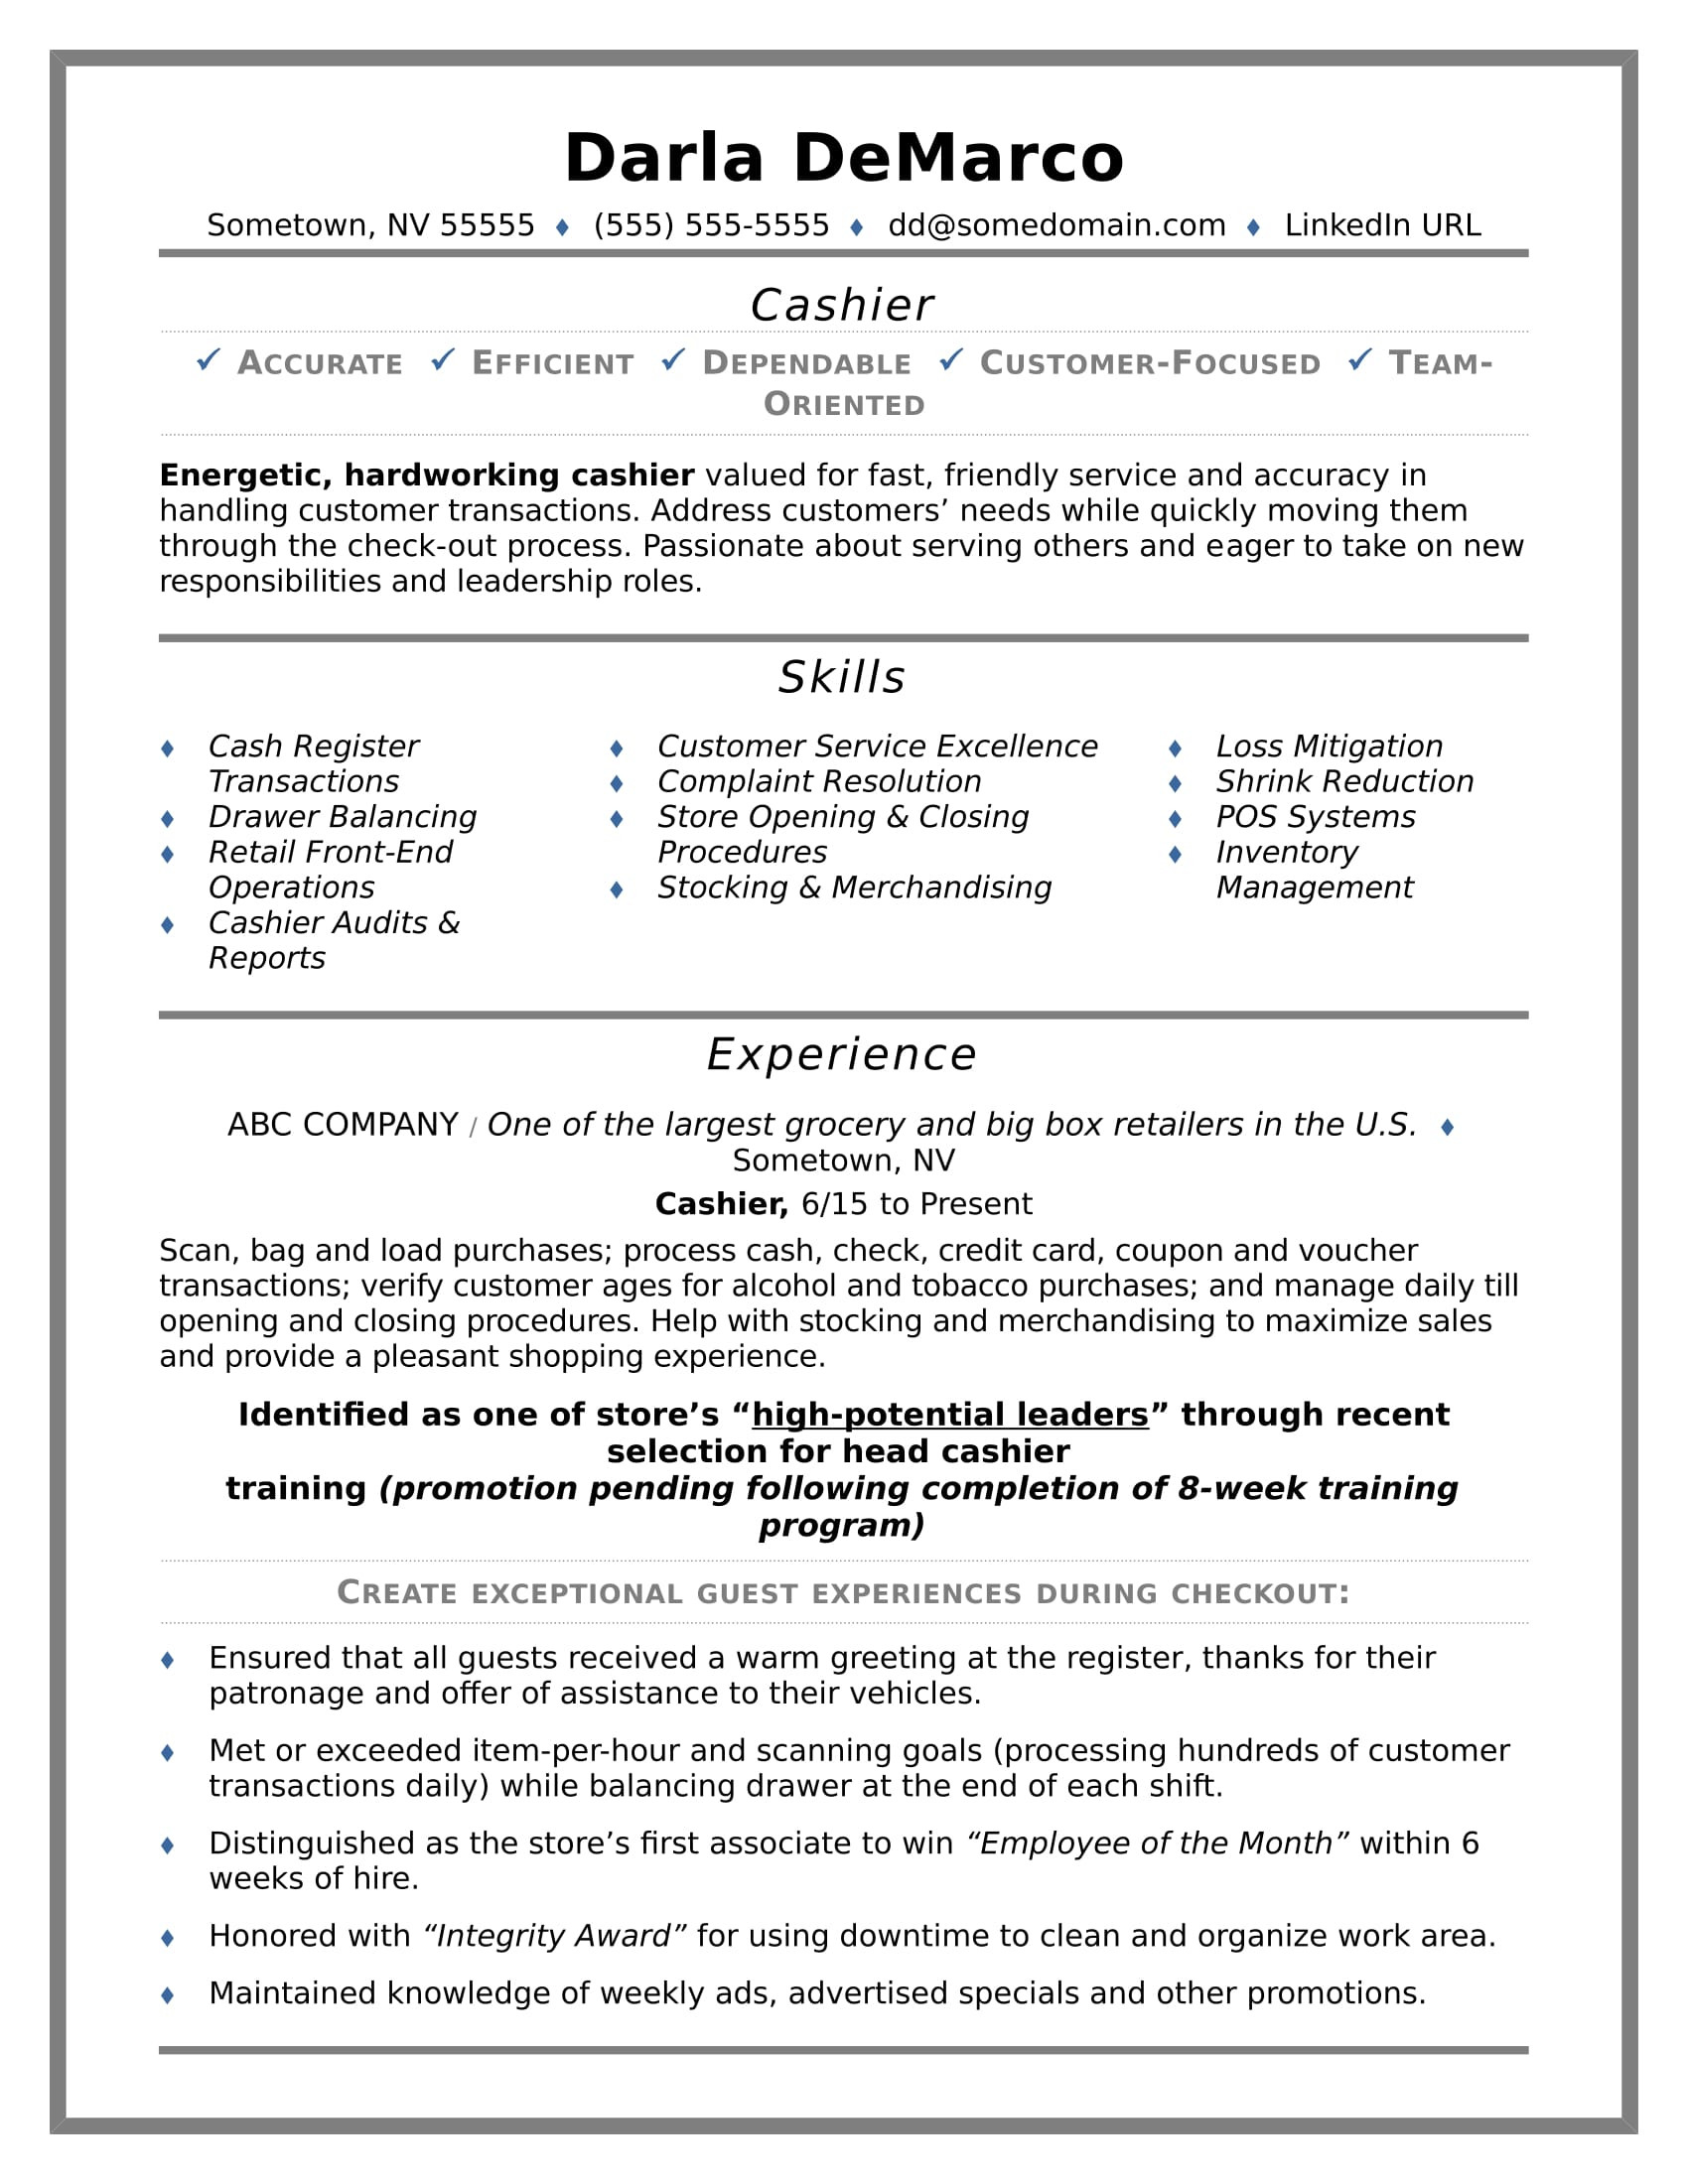 Sample Resume for Grocery Store Position Cashier Resume Sample Monster.com